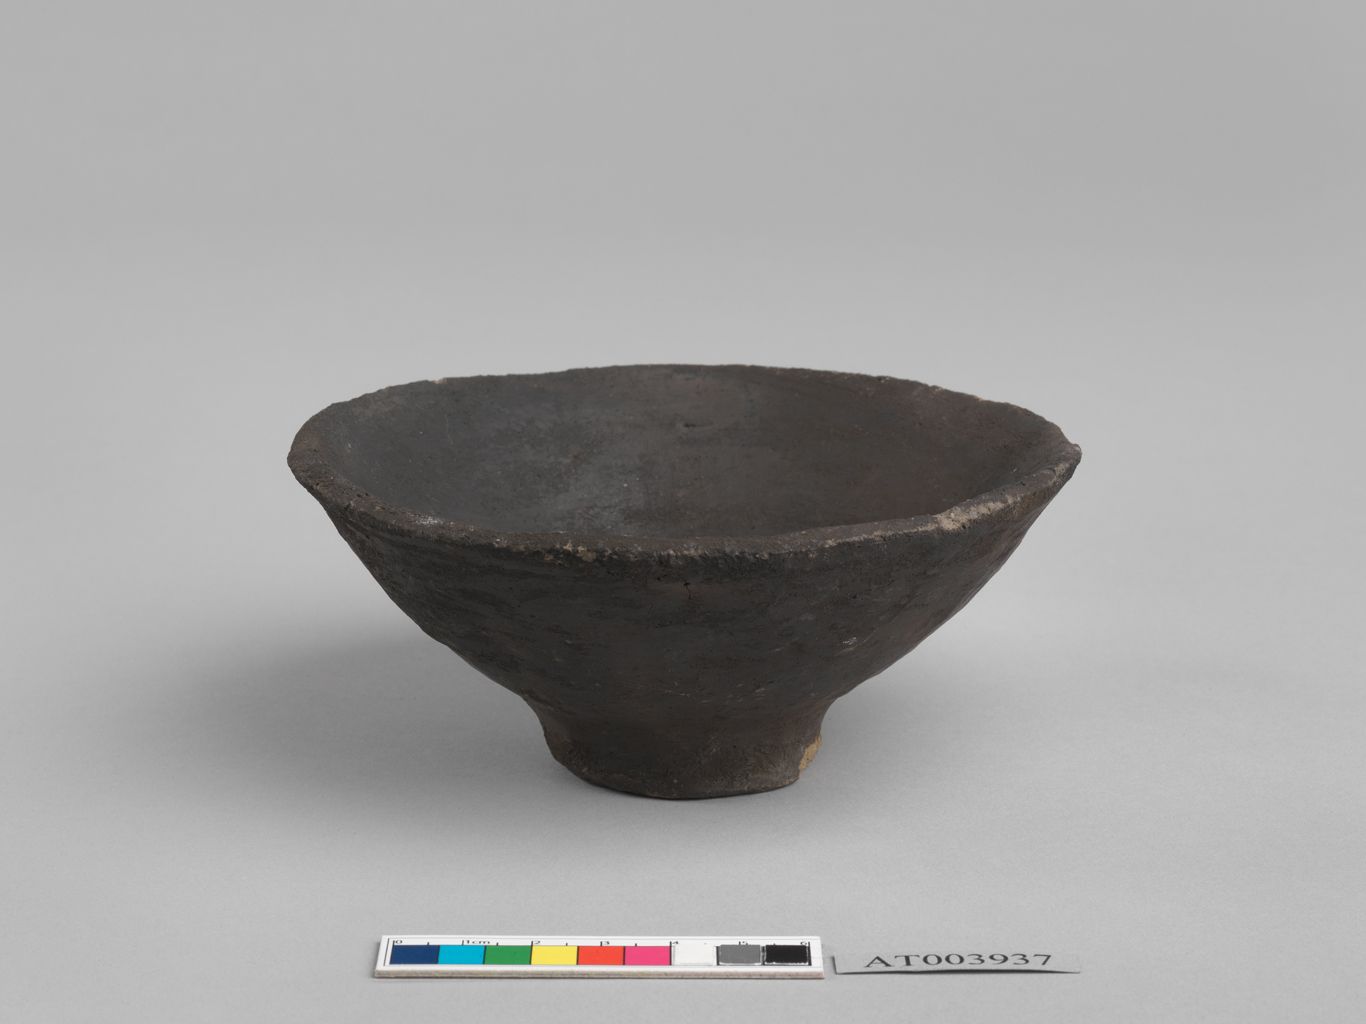 中文名稱:小陶碗（AT003937）英文名稱:Clay Bowl舊登錄名稱:小陶碗